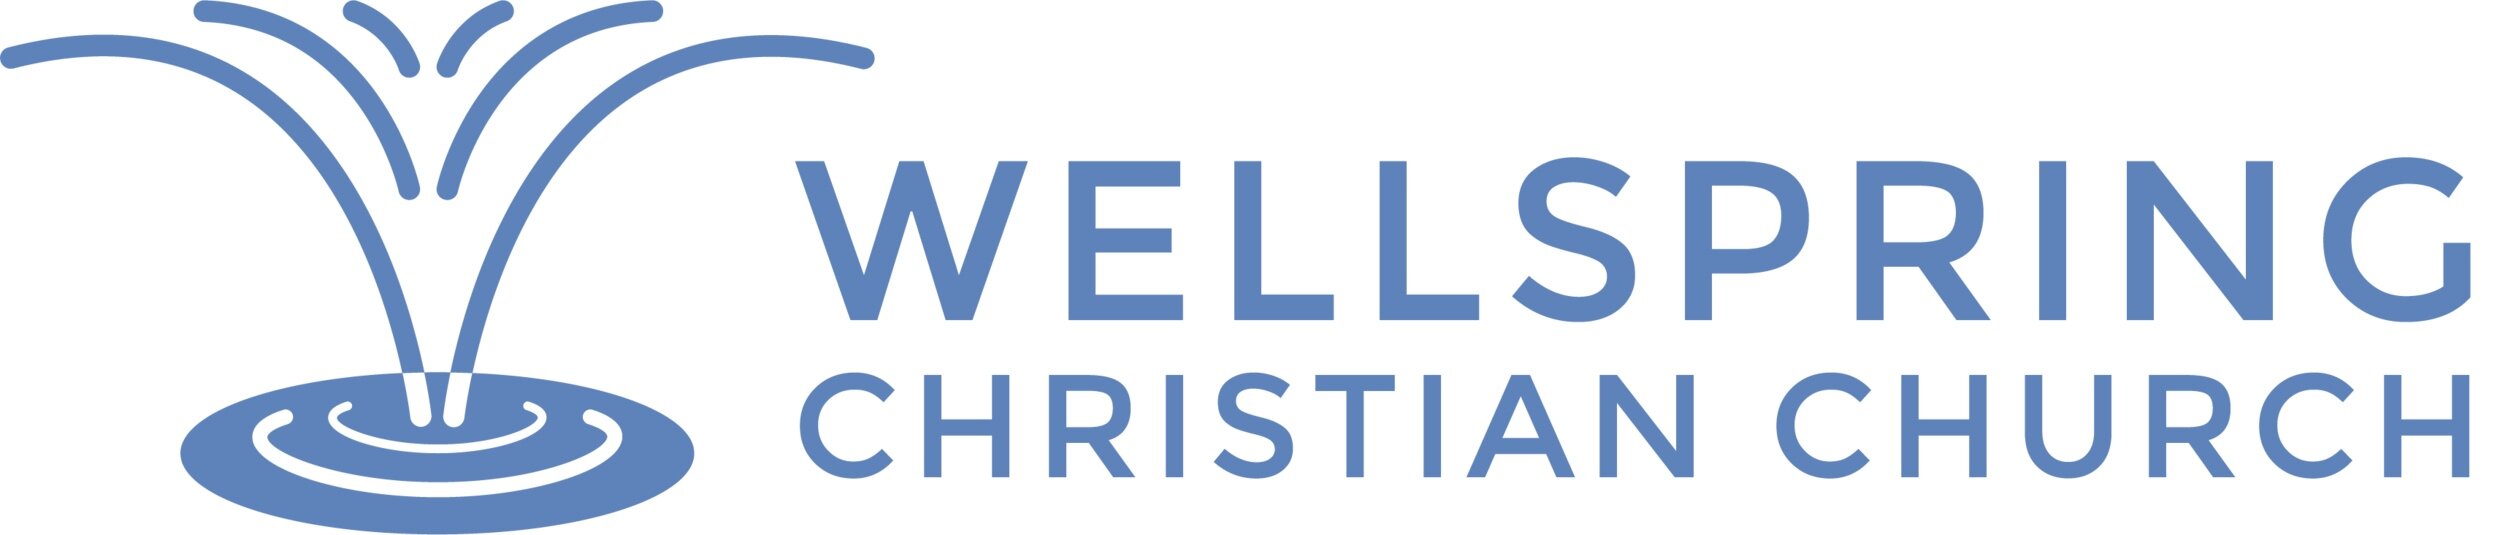 Wellspring Christian Church